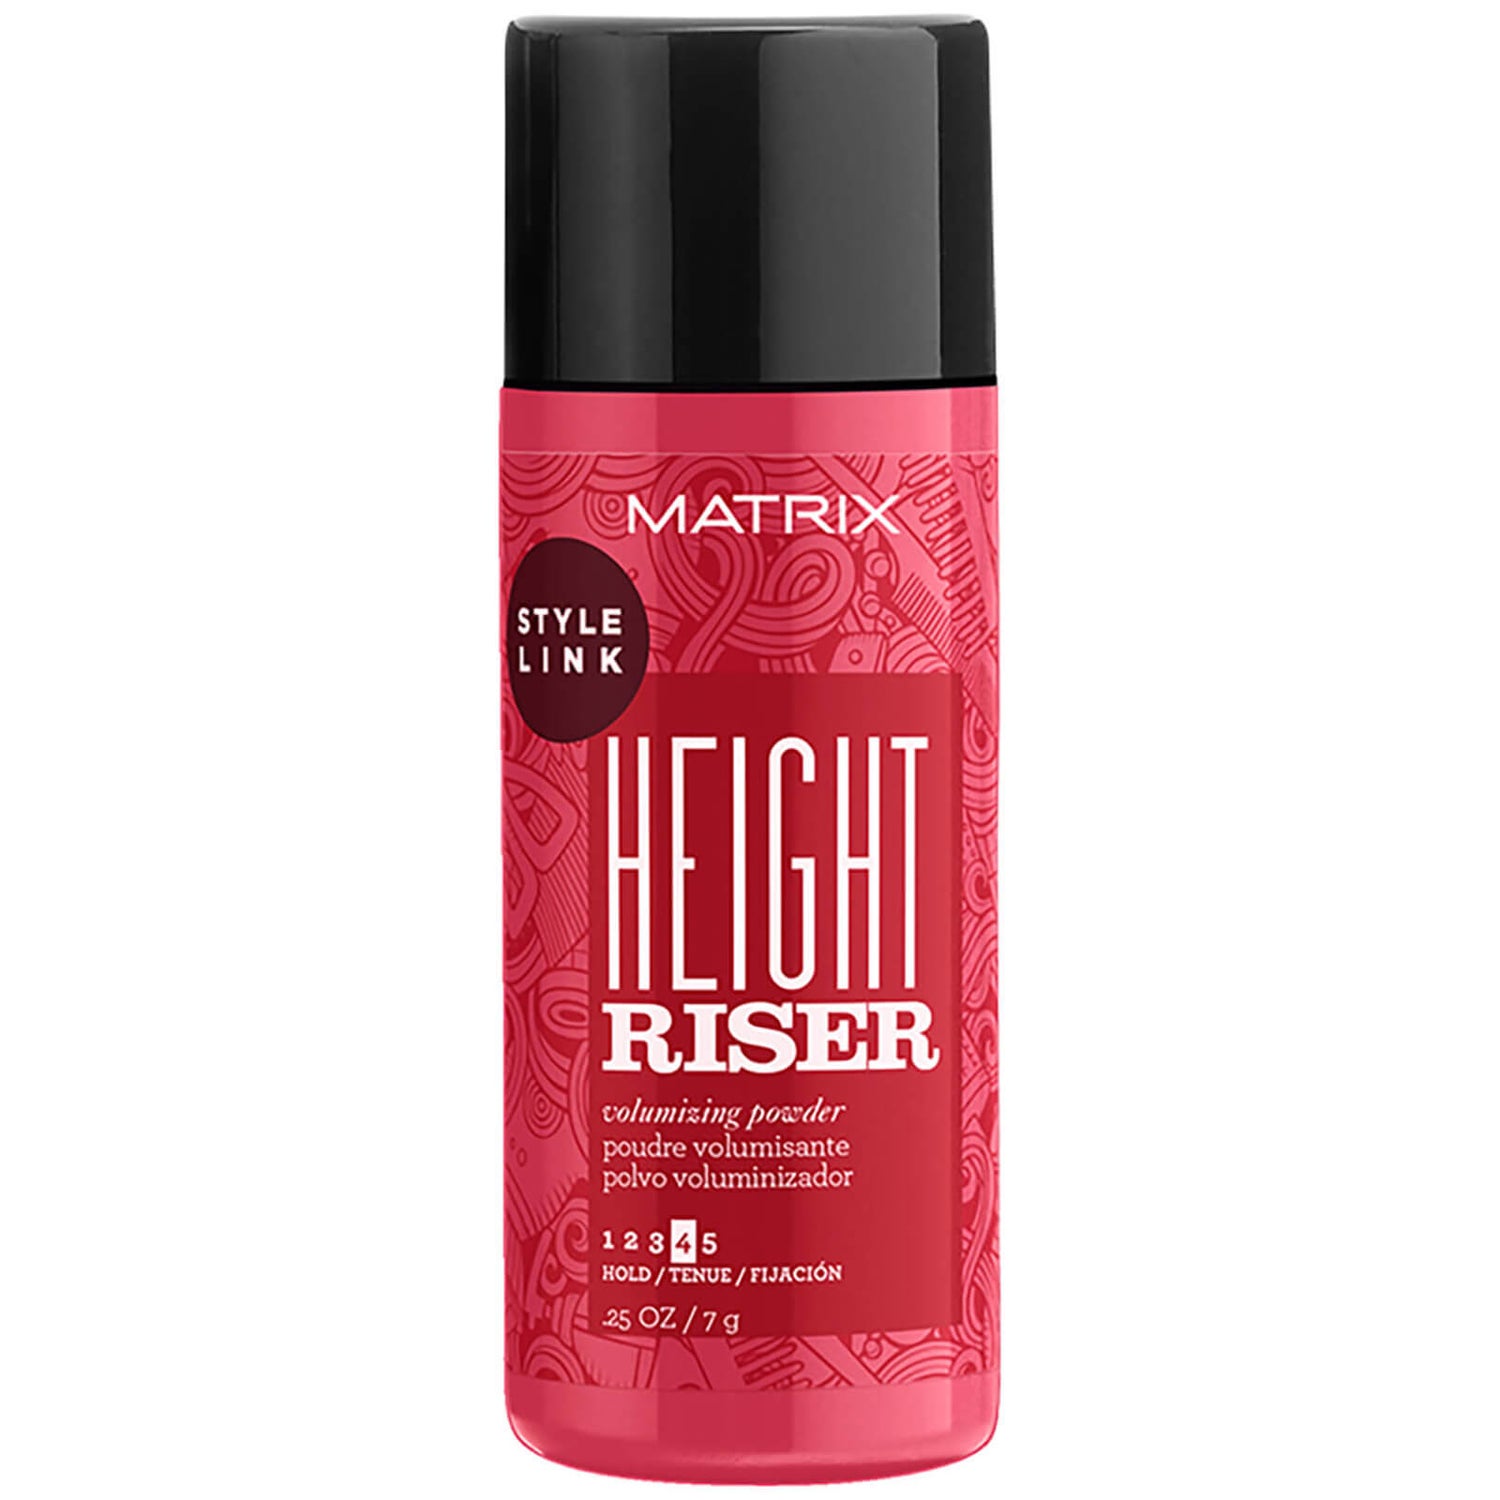 Matrix Style Link Height Riser Volumizing Powder